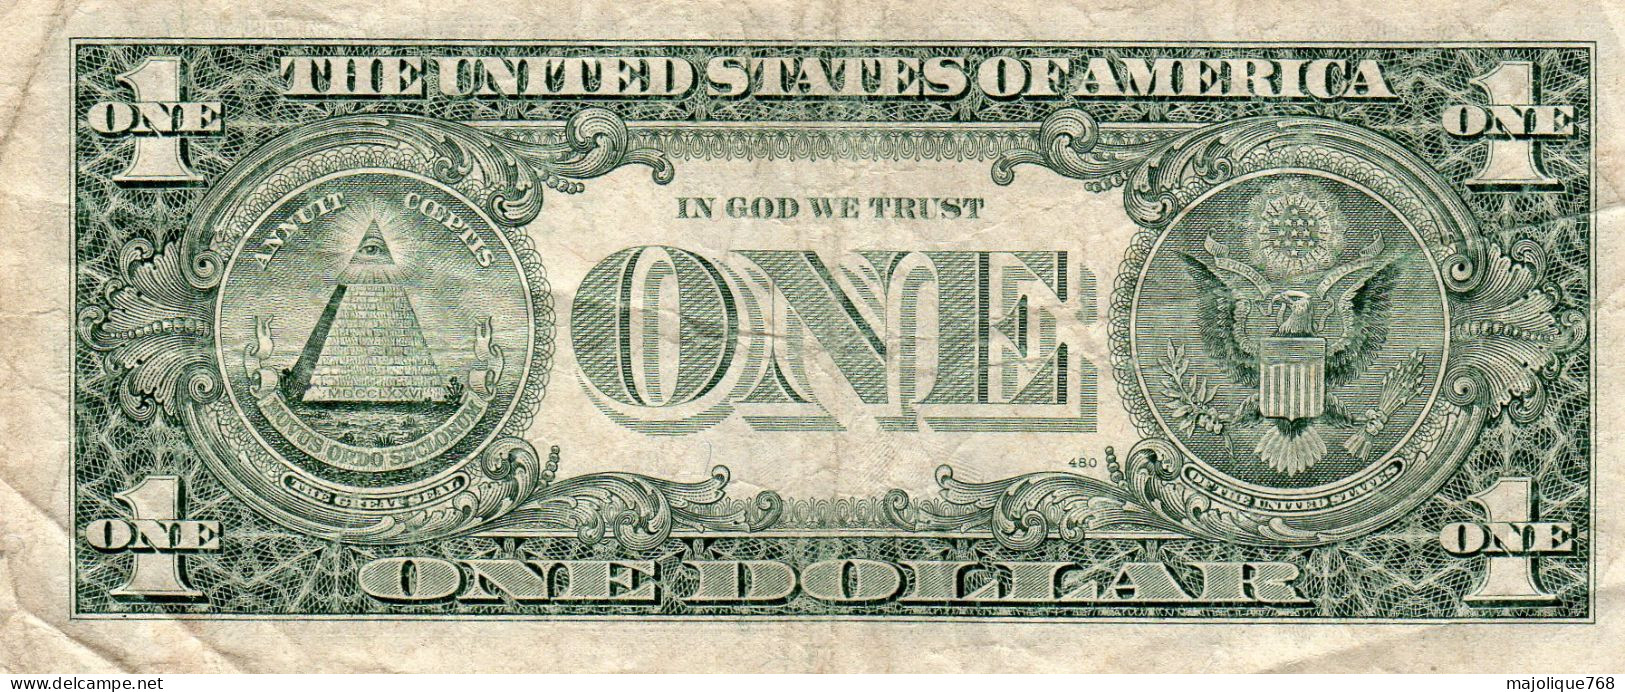 2 Billets Des Etats-Unis  Billet De 1 Dollar Année 1988 A "B  Et Dollar Année 1985 - Sets & Sammlungen